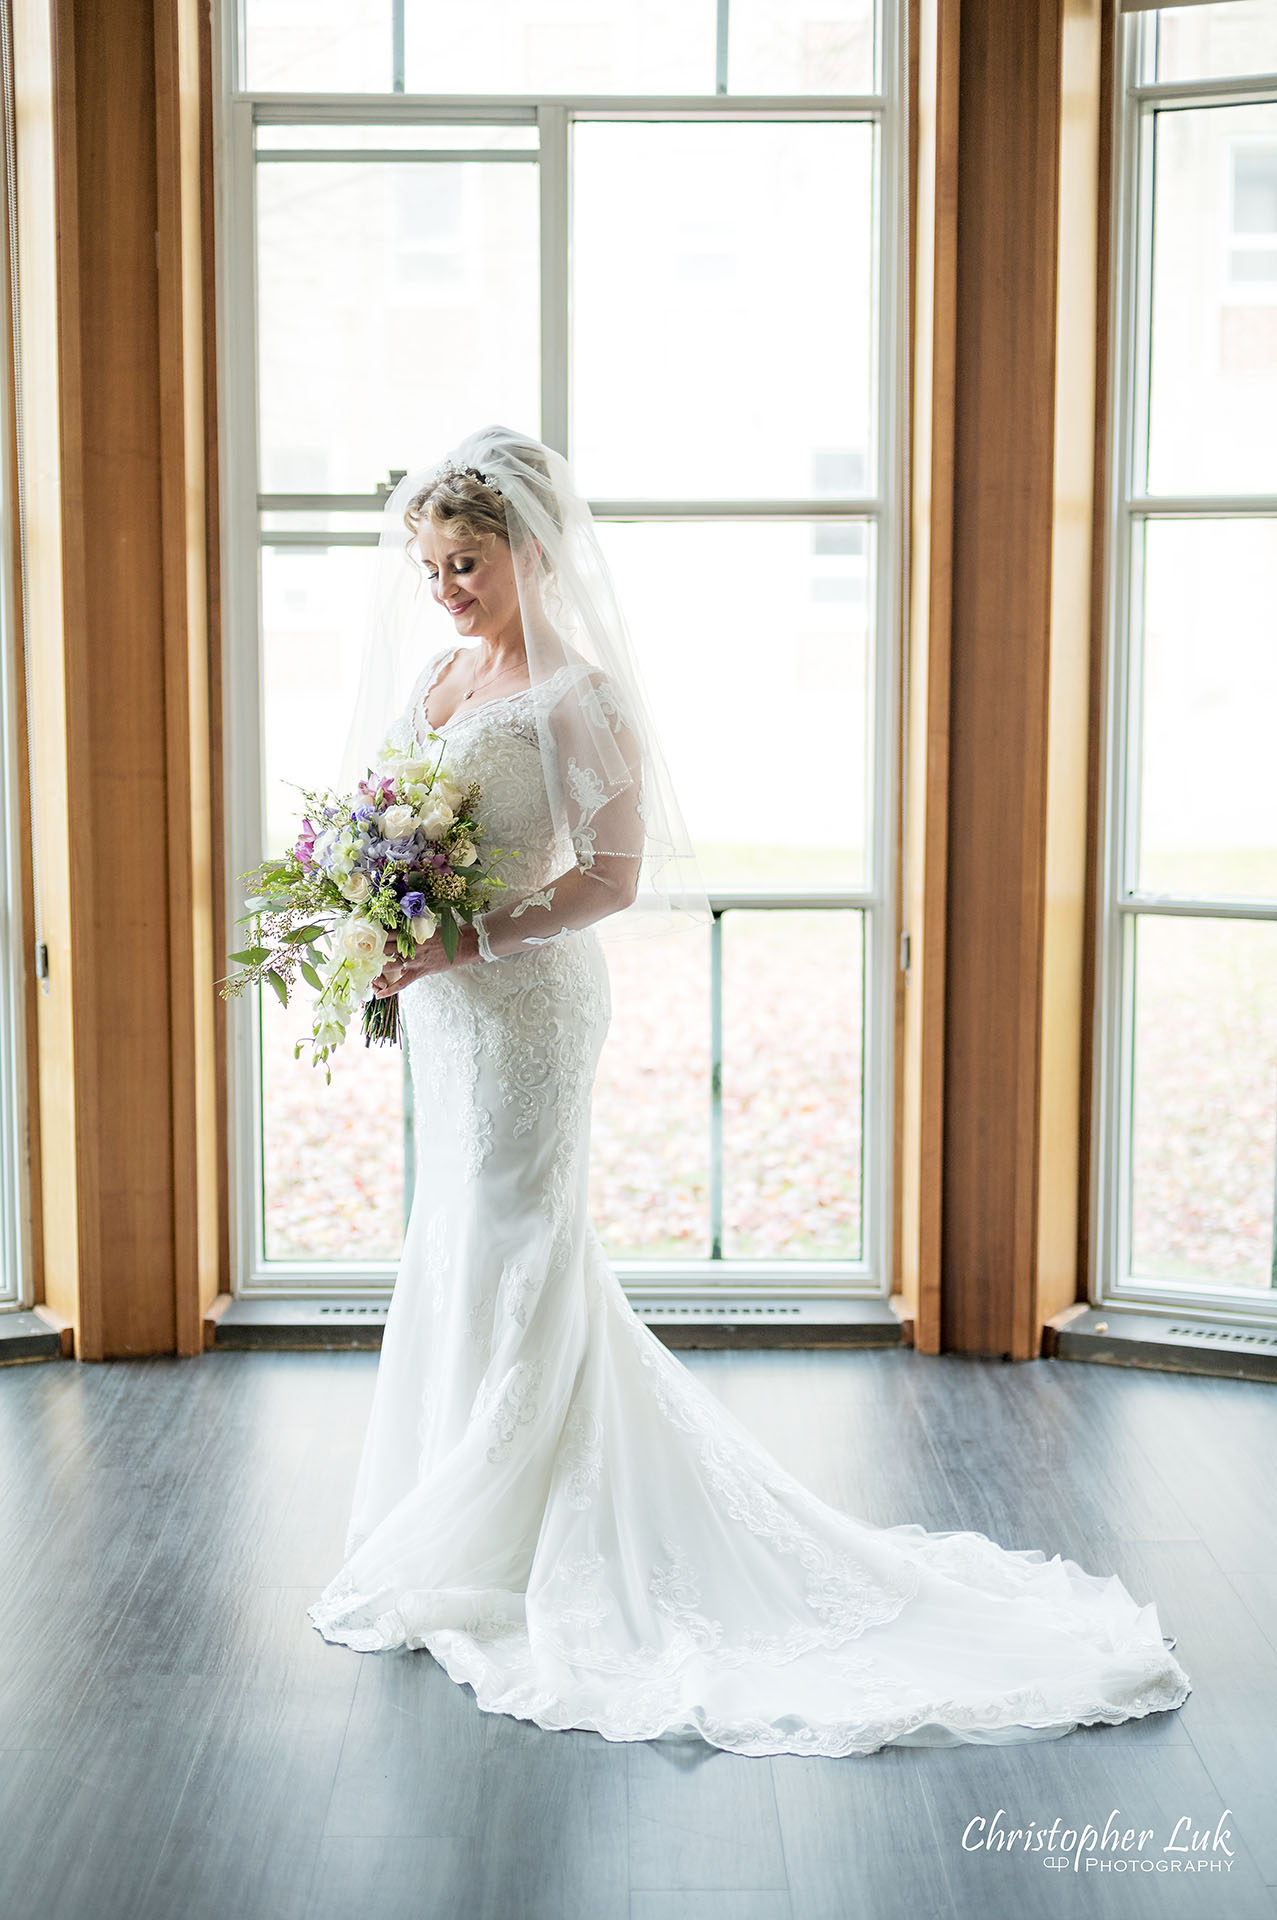 Christopher Luk Toronto Wedding Photographer Natural Candid Photojournalistic Tyndale Chapel Bride Bridalane White Bridal Gown Dress Portrait Floral Bouquet Veil 